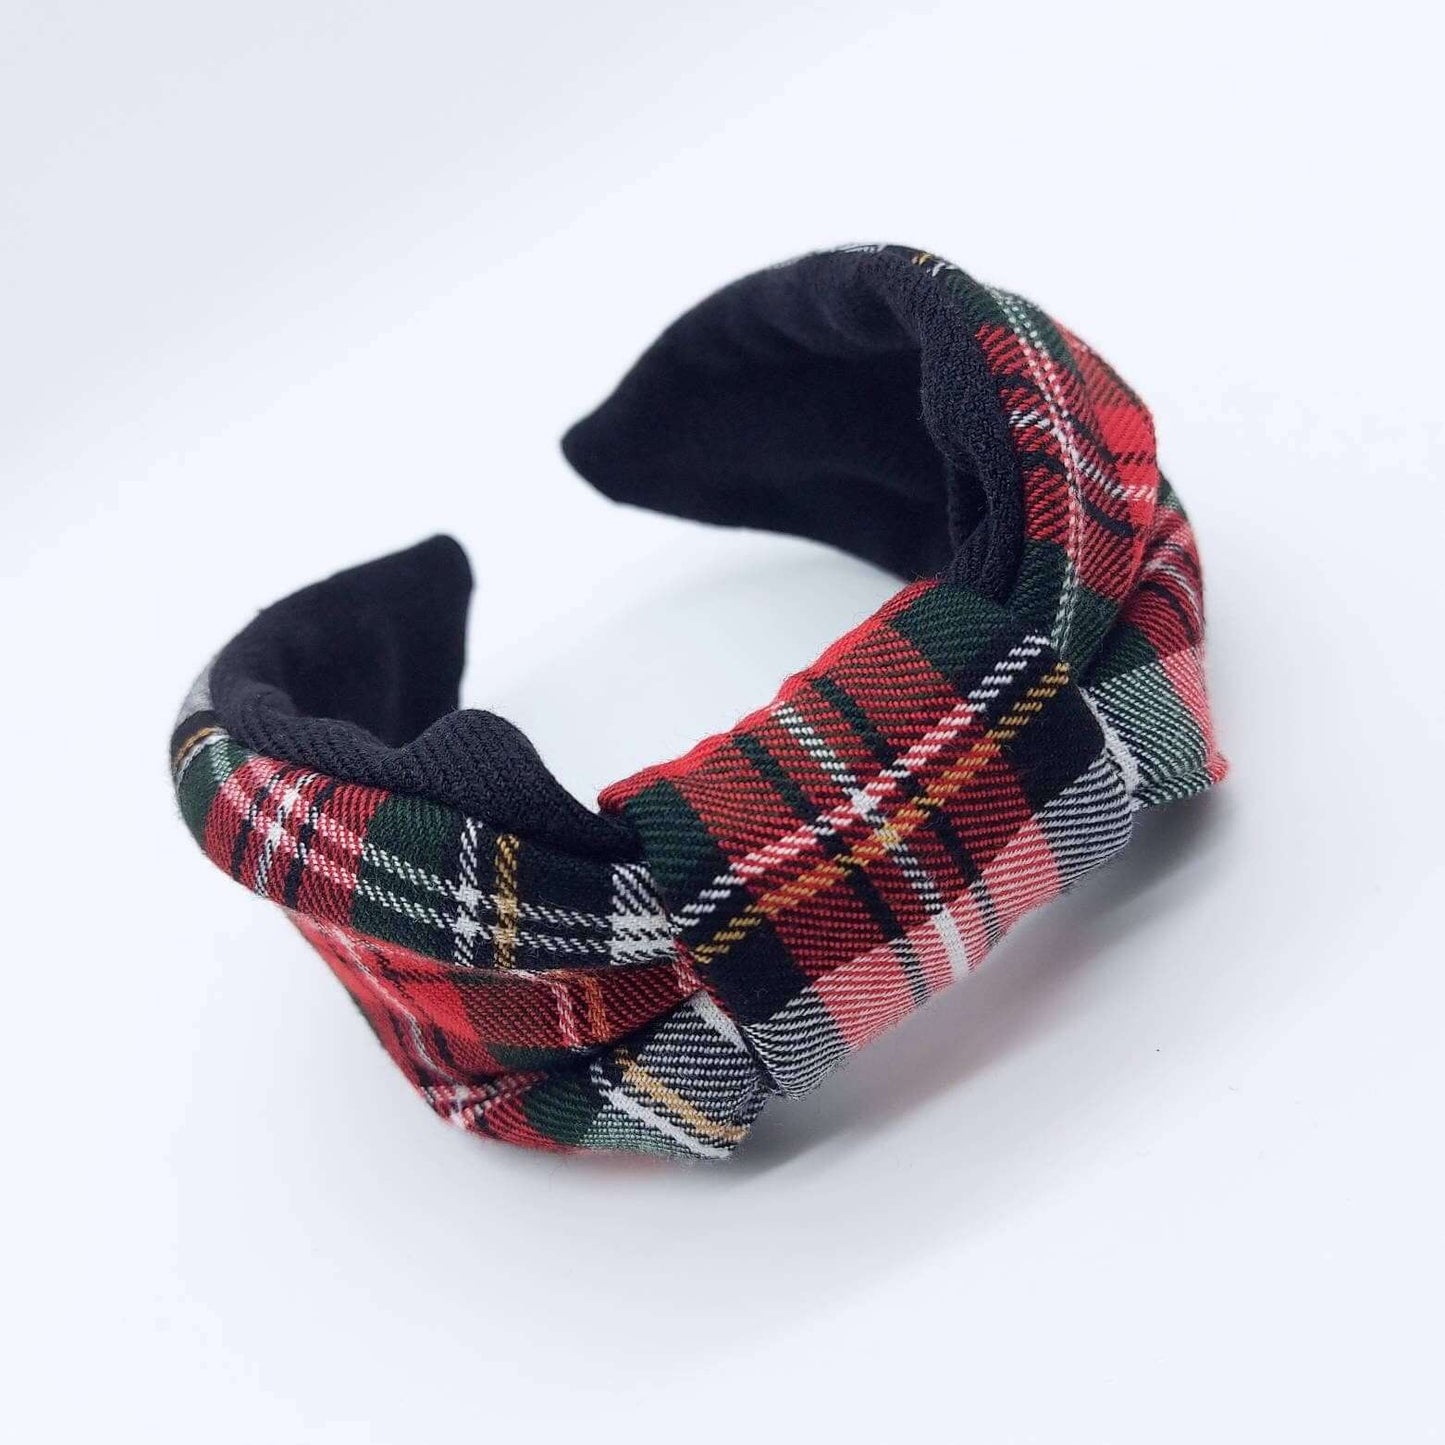 A bow-style, black and red tartan plaid fabric headband with plain black lining underneath